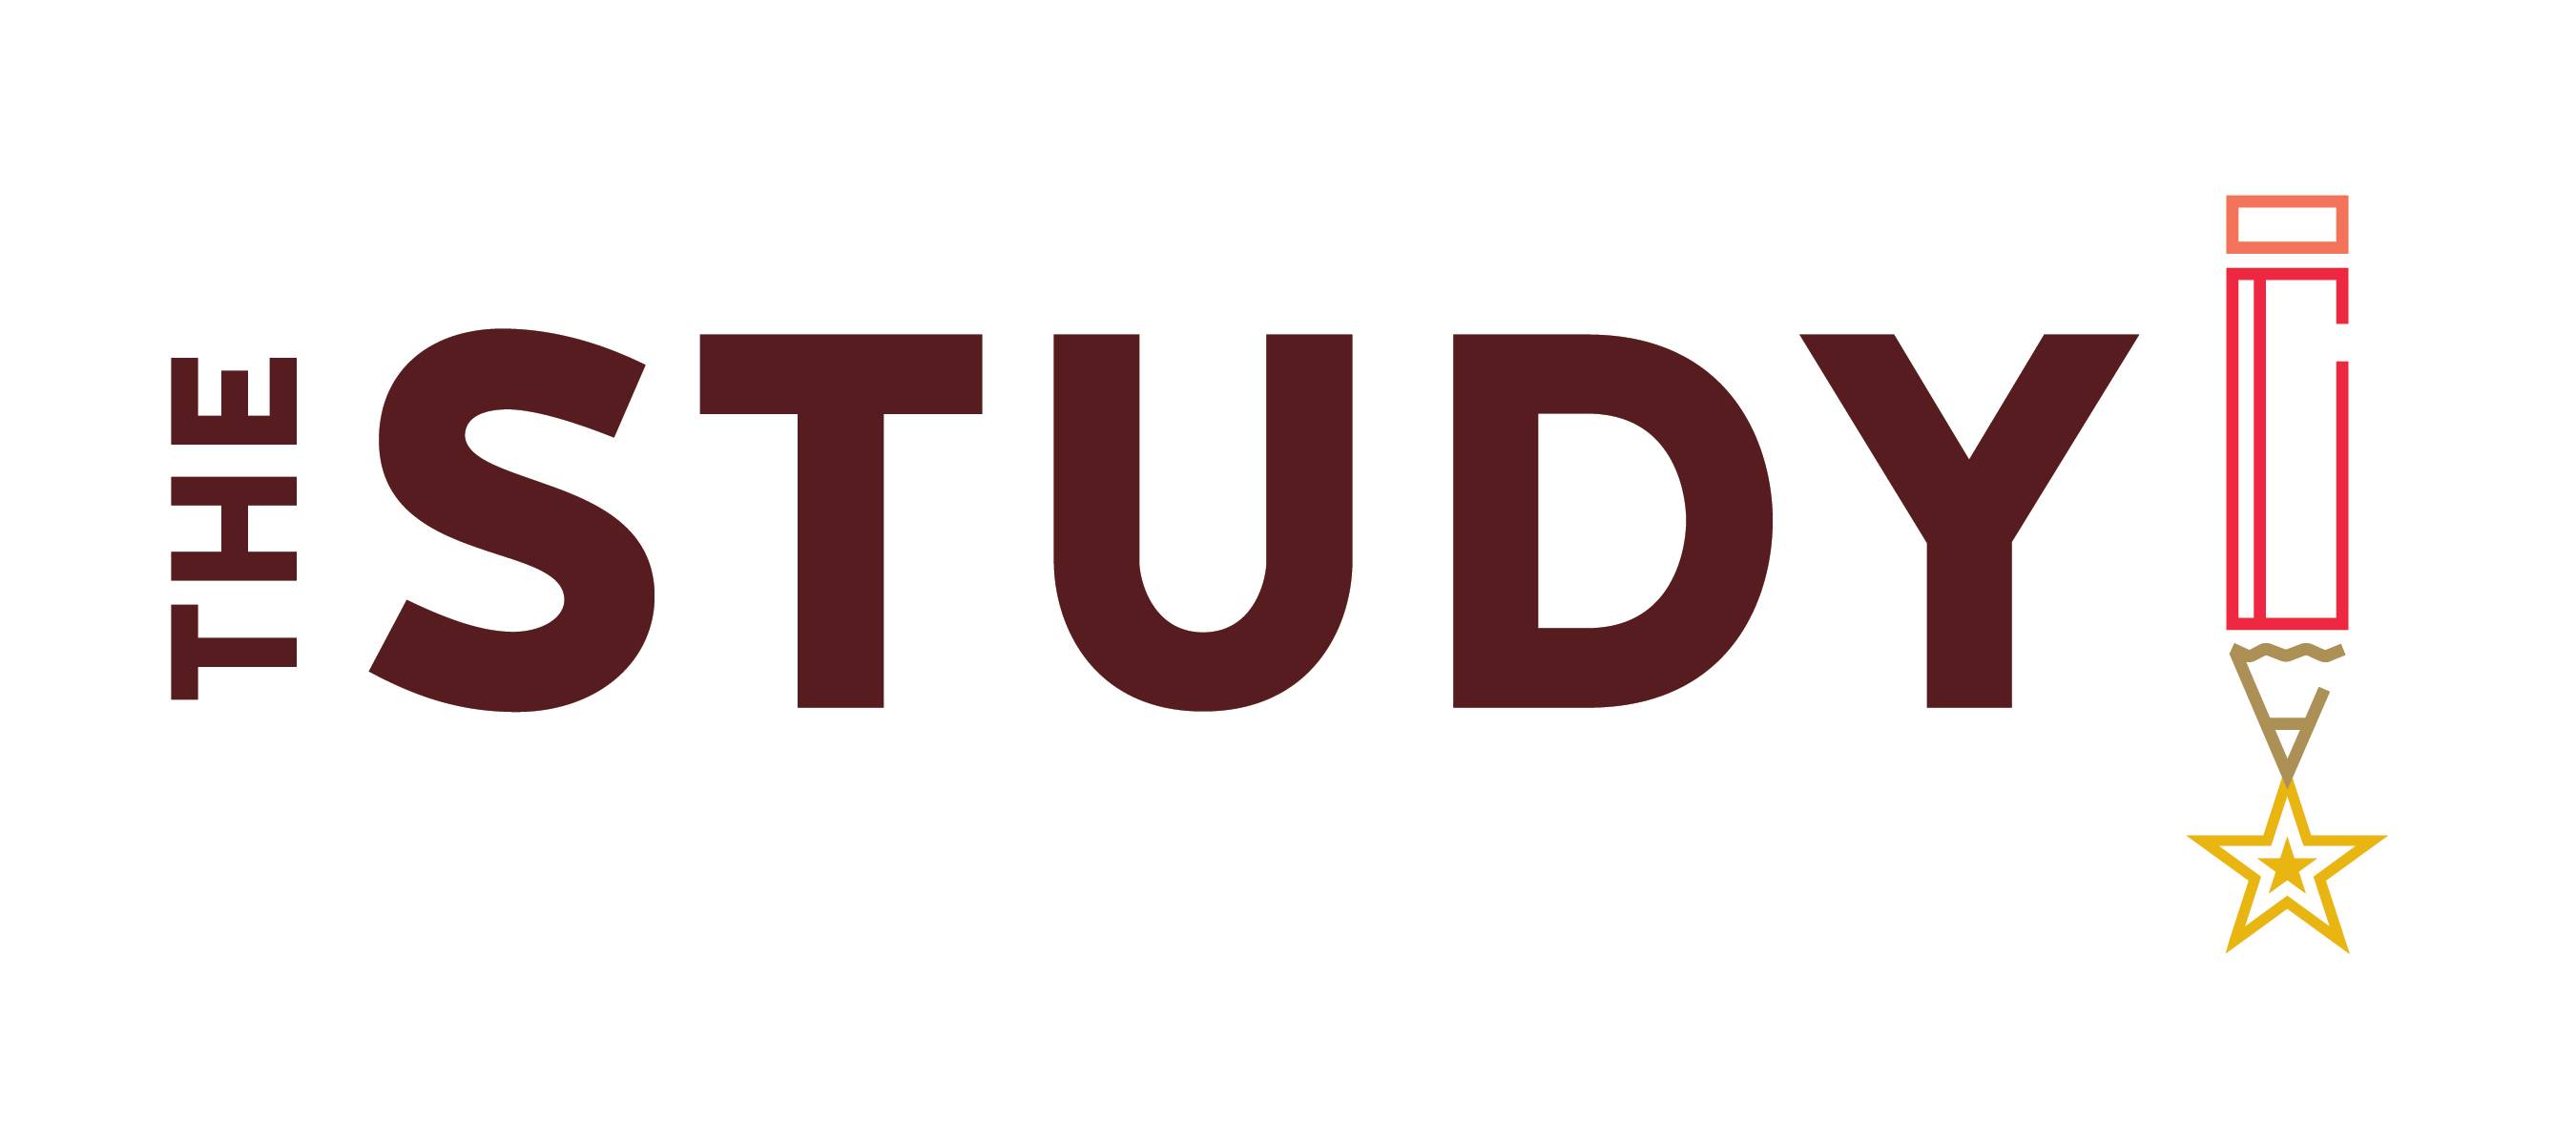 The Study logo